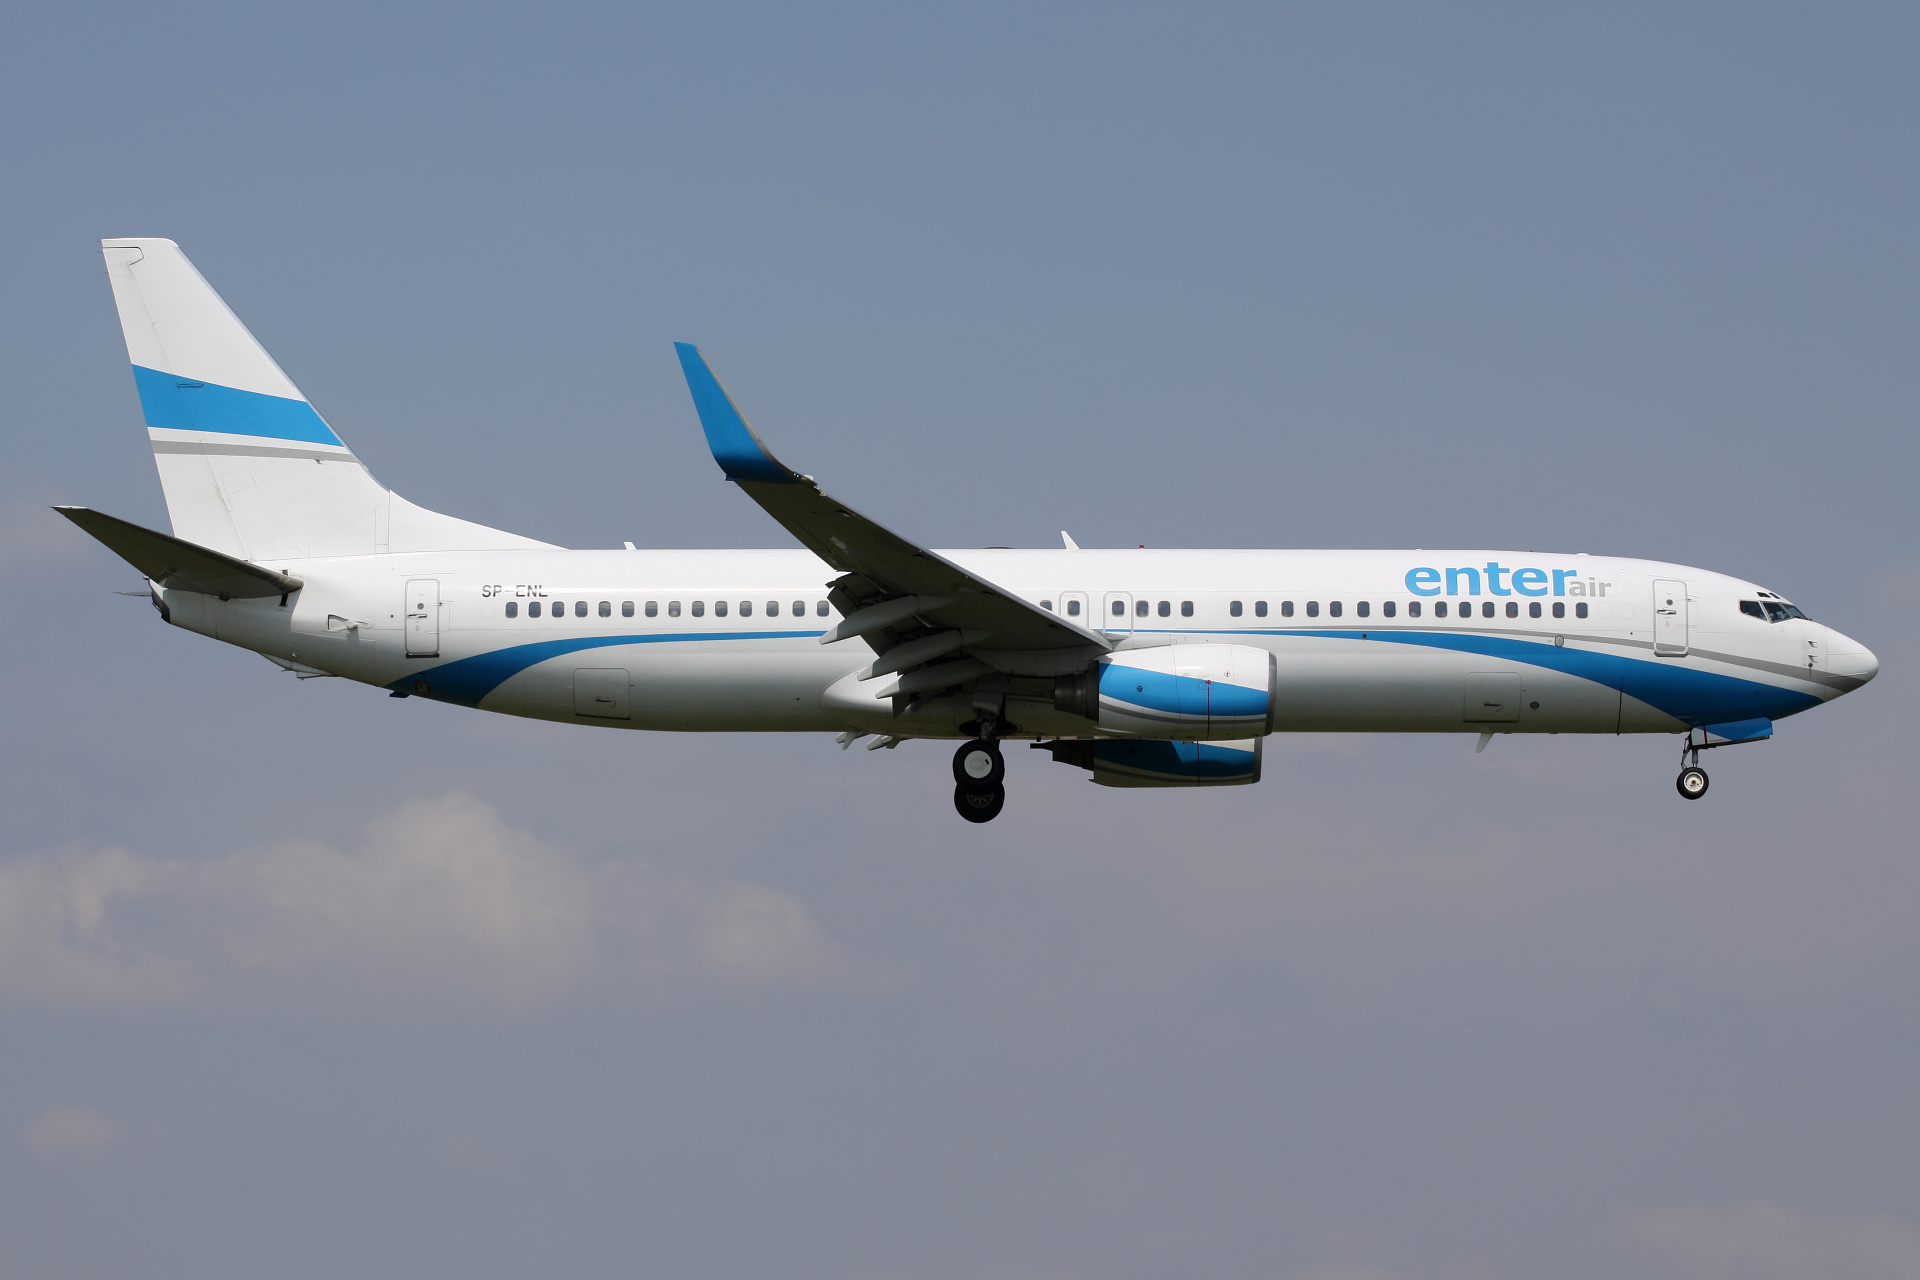 SP-ENL (Aircraft » EPWA Spotting » Boeing 737-800 » Enter Air)